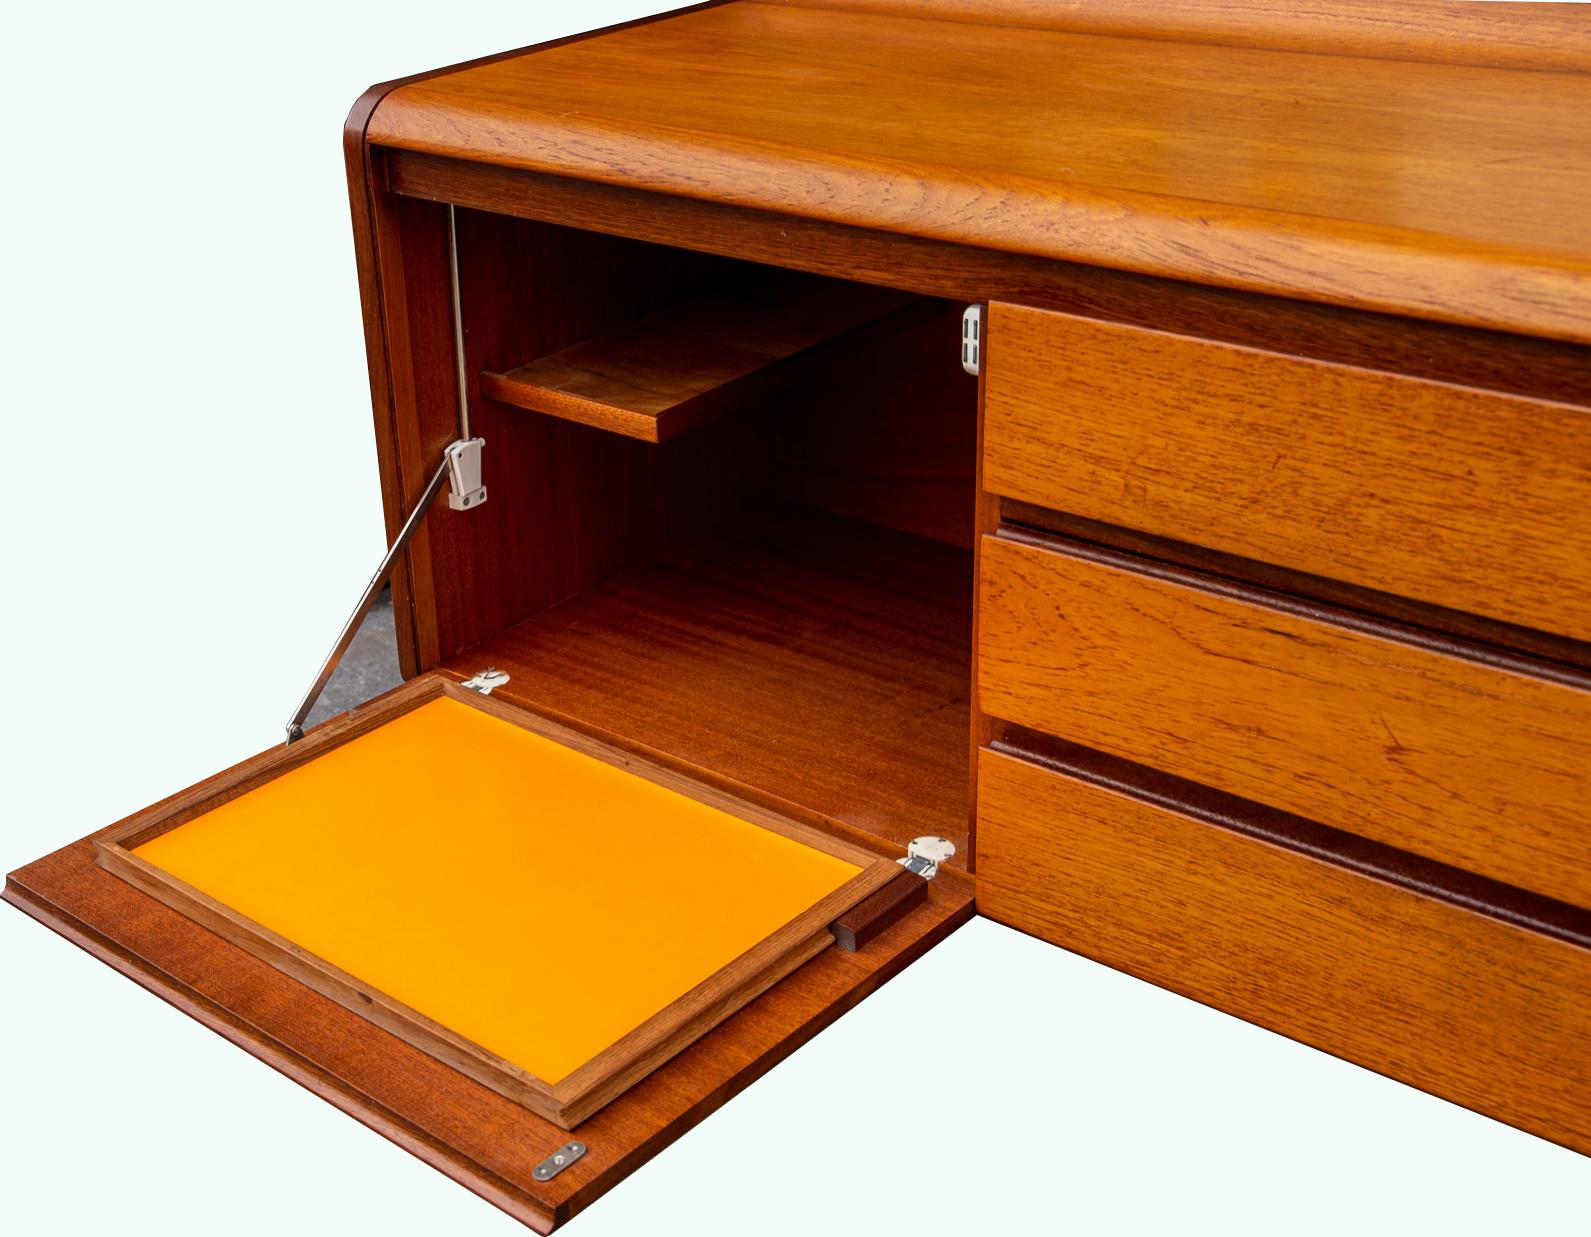 Teak A mid-century British minimalist linear form sideboard c1965